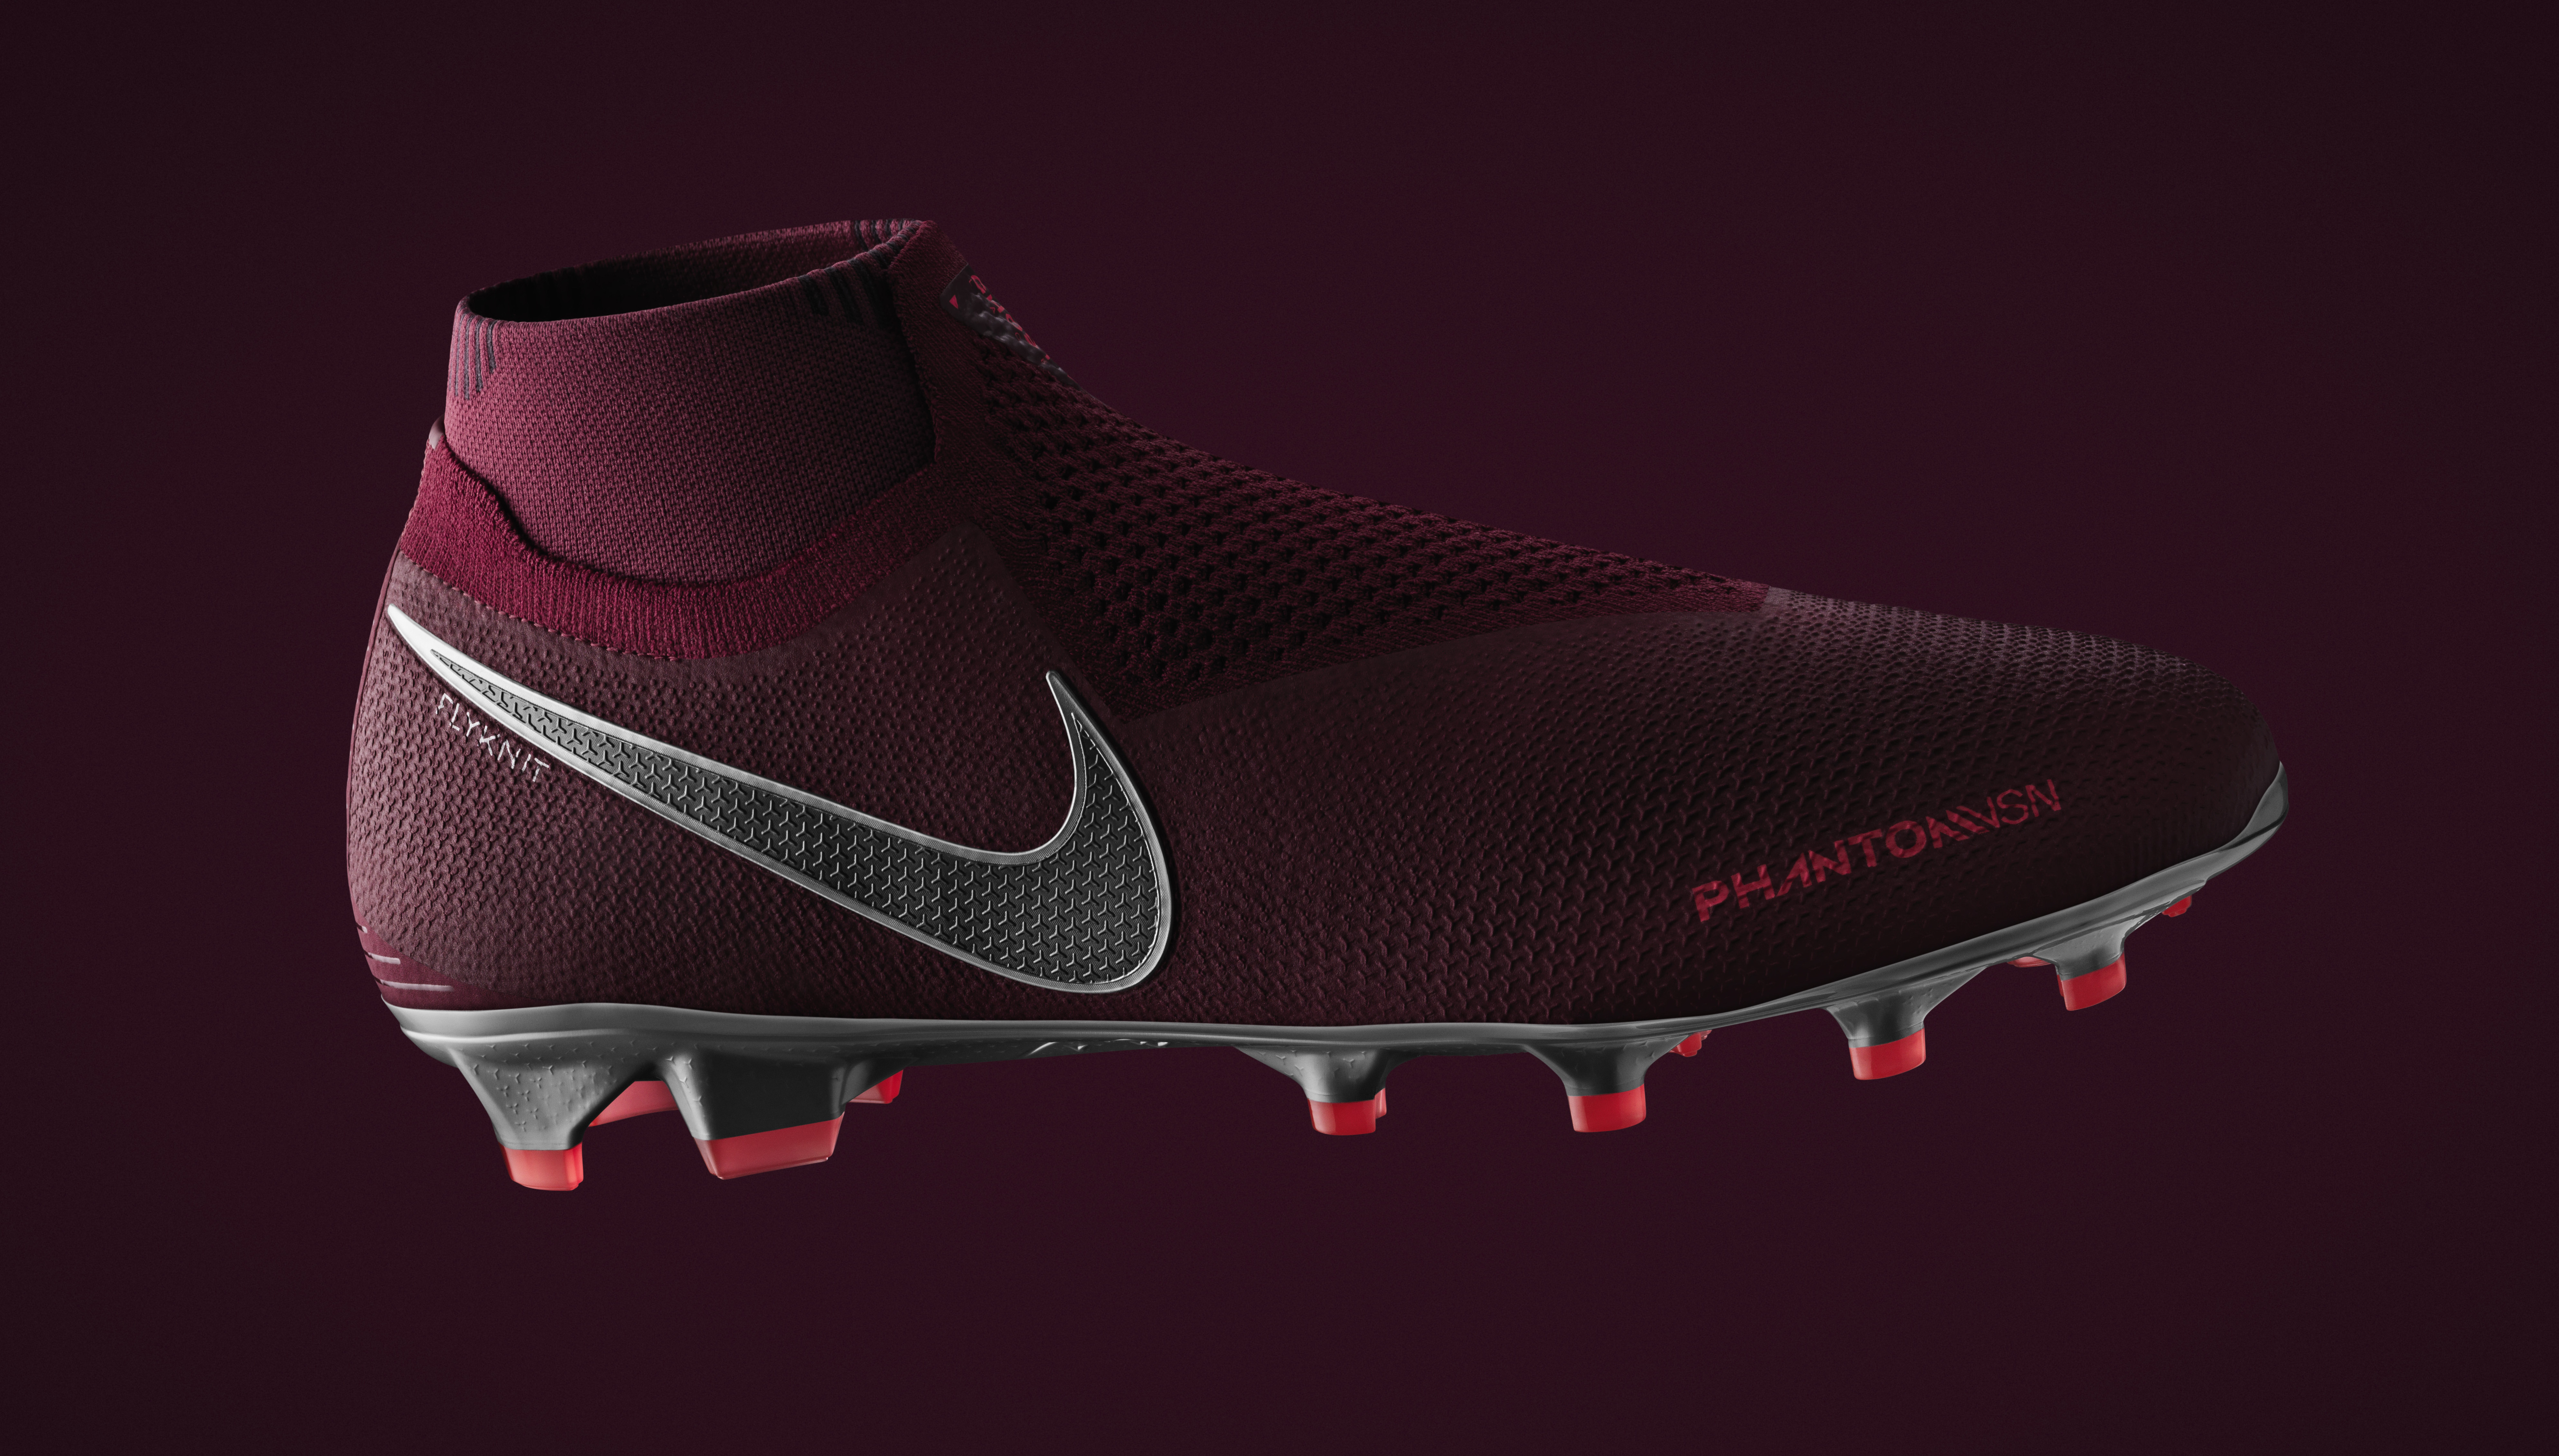 maravilloso Rebotar sentido común Nike PhantomVSN Soccer Cleat Release Date | Sole Collector